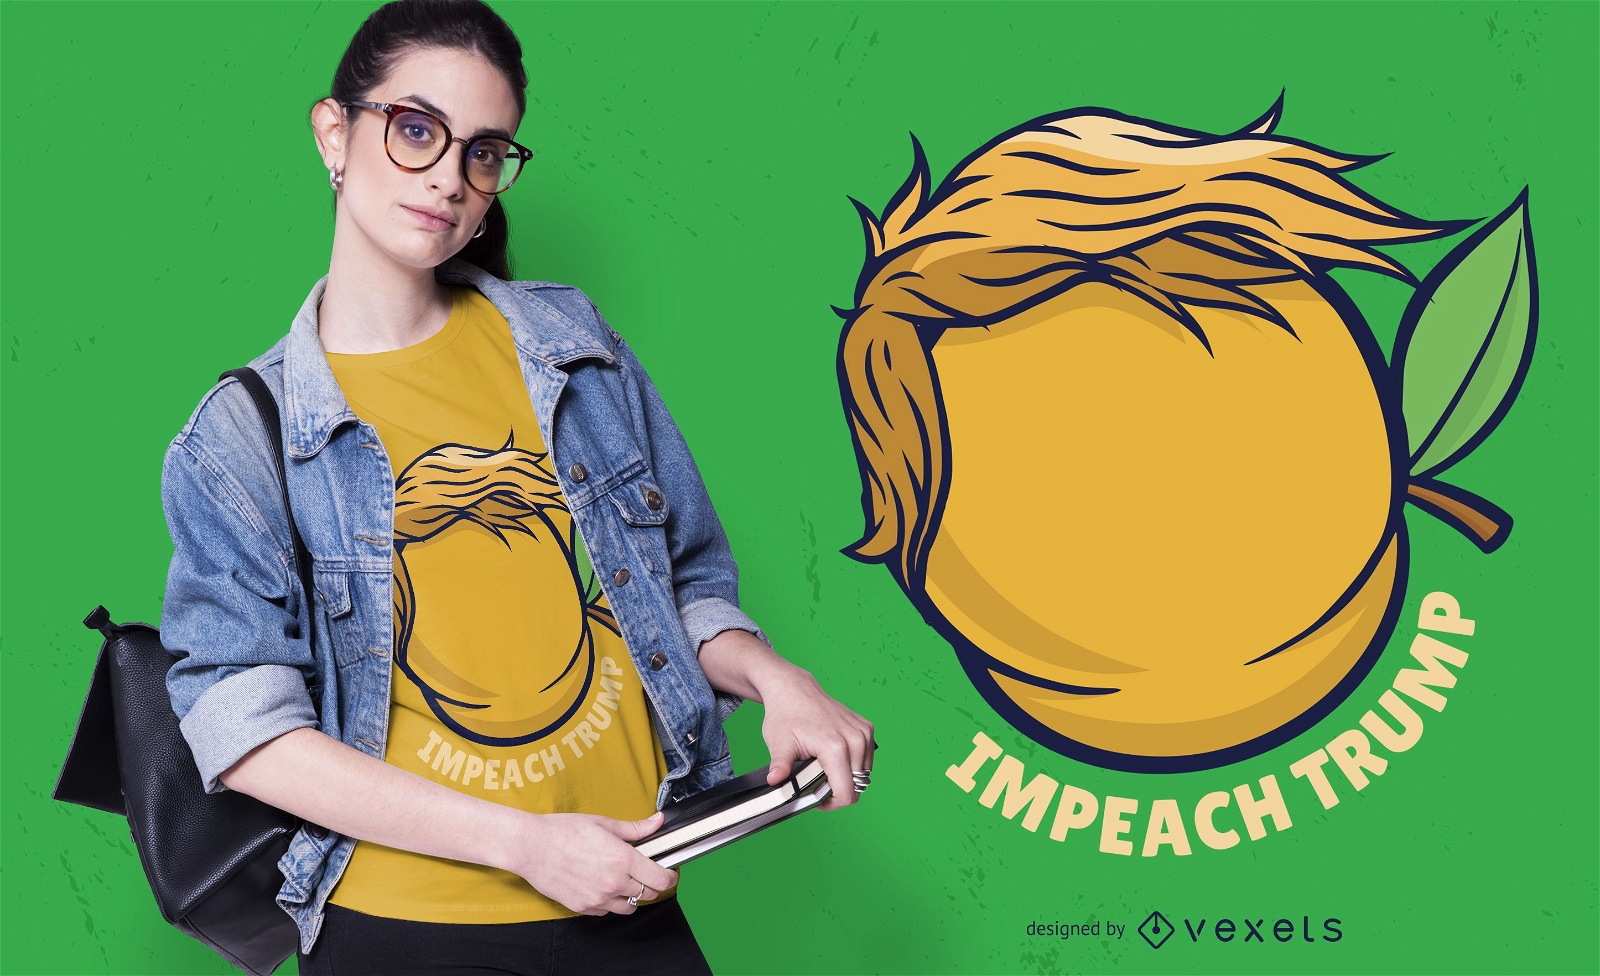 Impeach trump t-shirt design